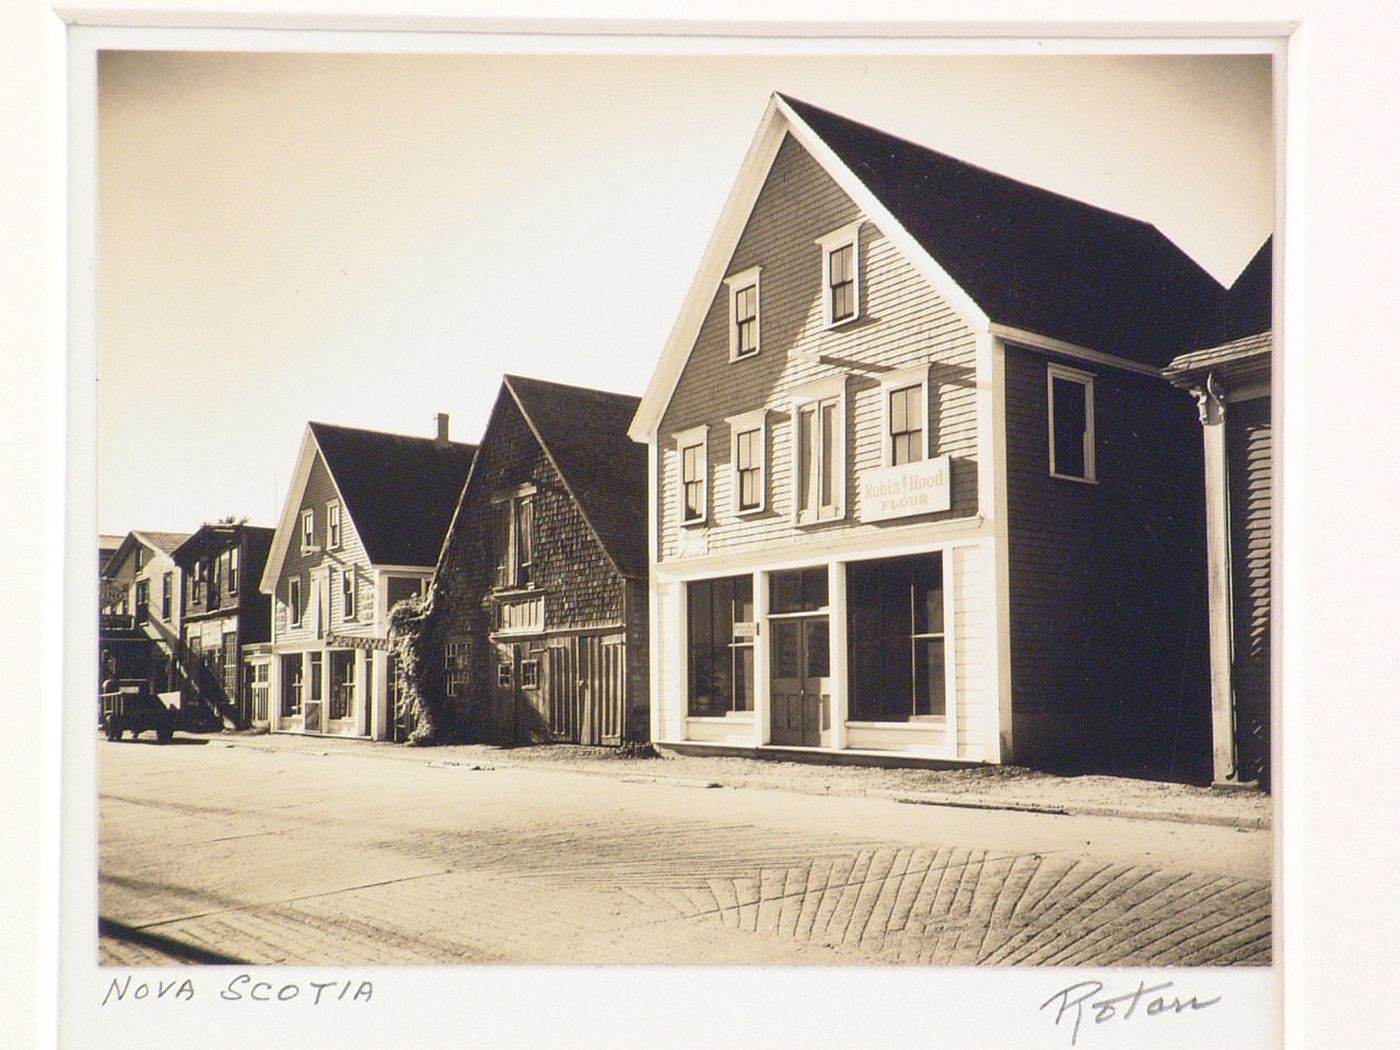 Robin Hood Flour store, frame houses on street, Nova Scotia